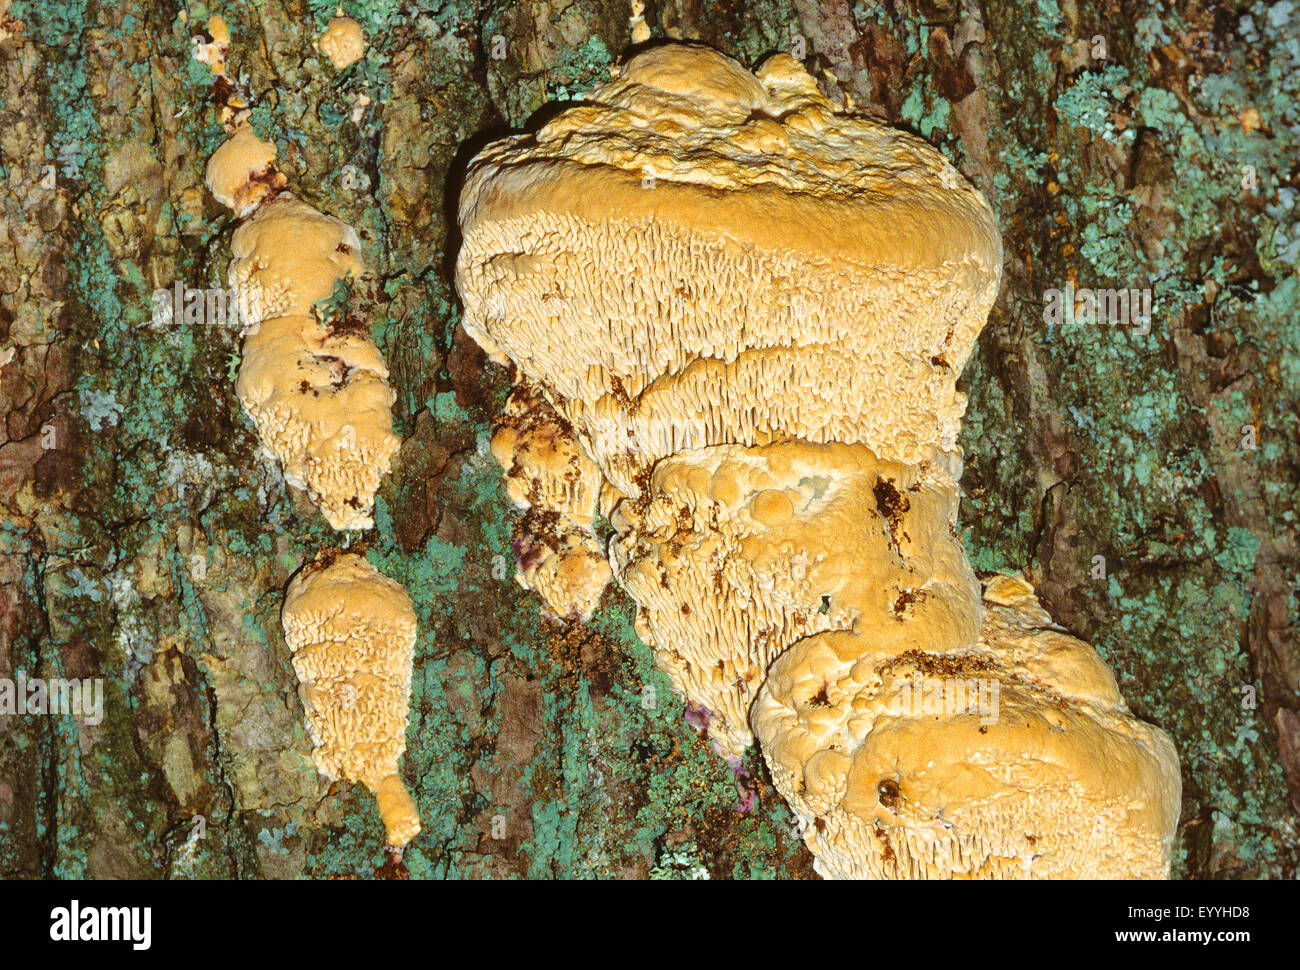 Oak mazegill, Maze-gill fungus (Daedalea quercina, Trametes quercina), fruiting tree at oak trunk, Germany Stock Photo